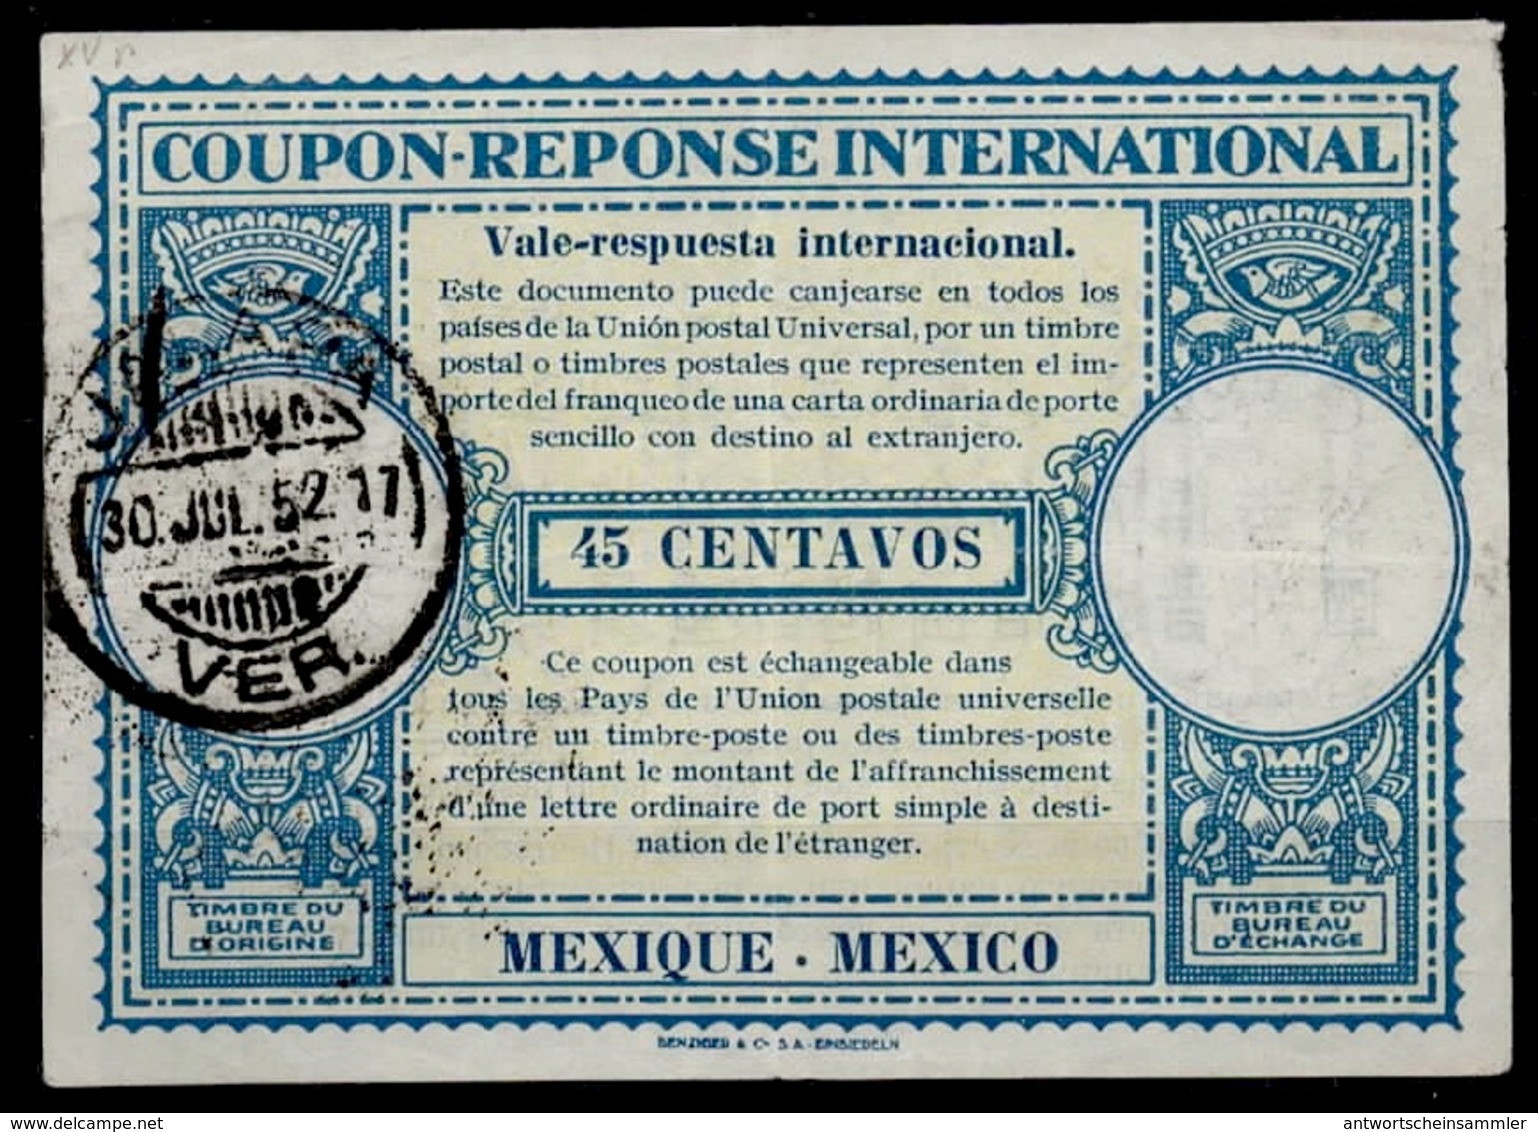 MEXICO / MEXIQUE Lo15  45 CENTAVOS International Reply Coupon Reponse Antwortschein IAS IRC O JALAPA 30.7.52 - Mexico